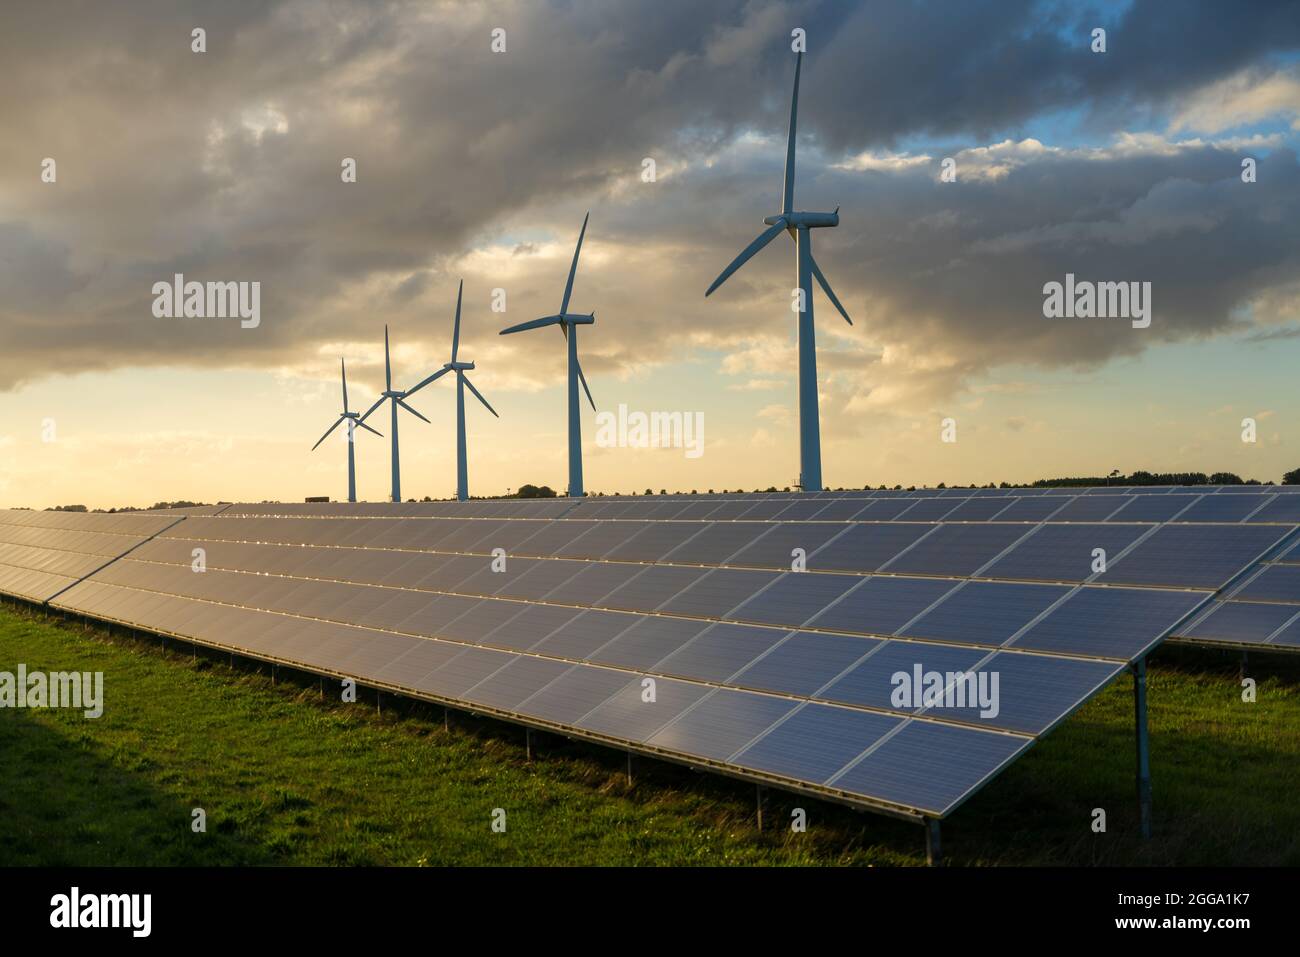 Wind turbine and solar panels energy generaters on wind farm Stock Photo